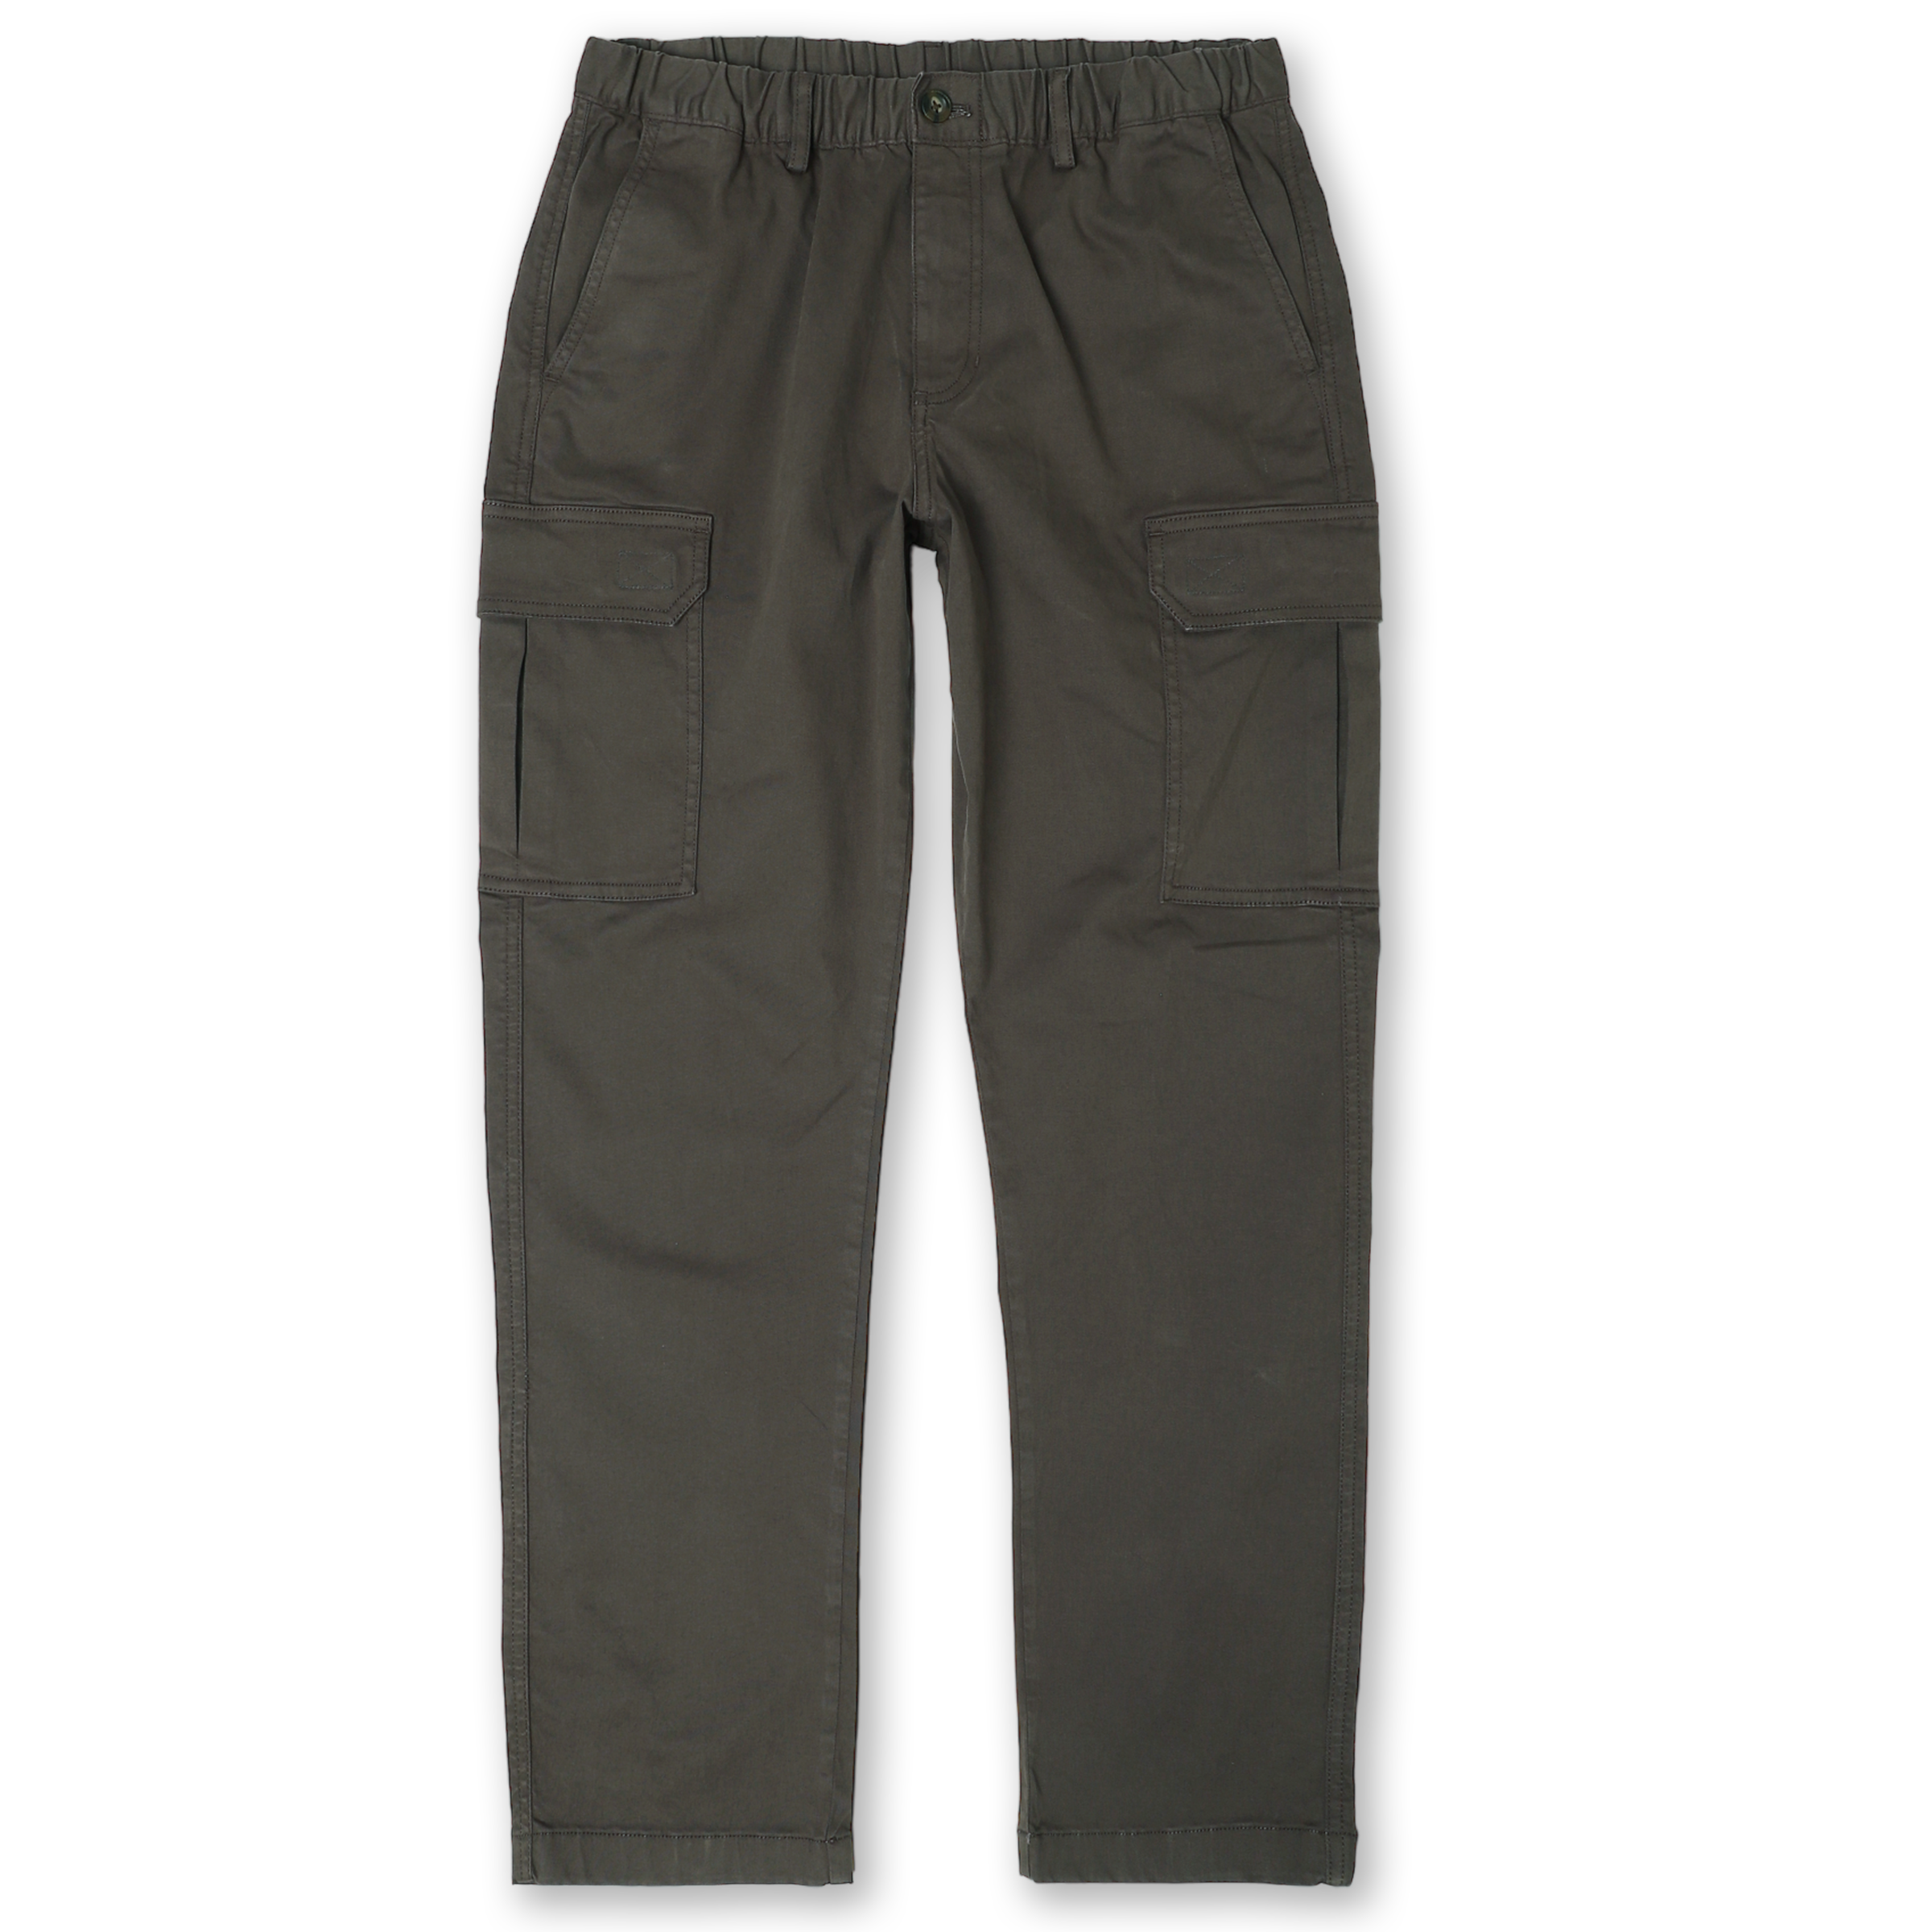 Black Cargo Pants Model - Cargo Pants Png Transparent PNG